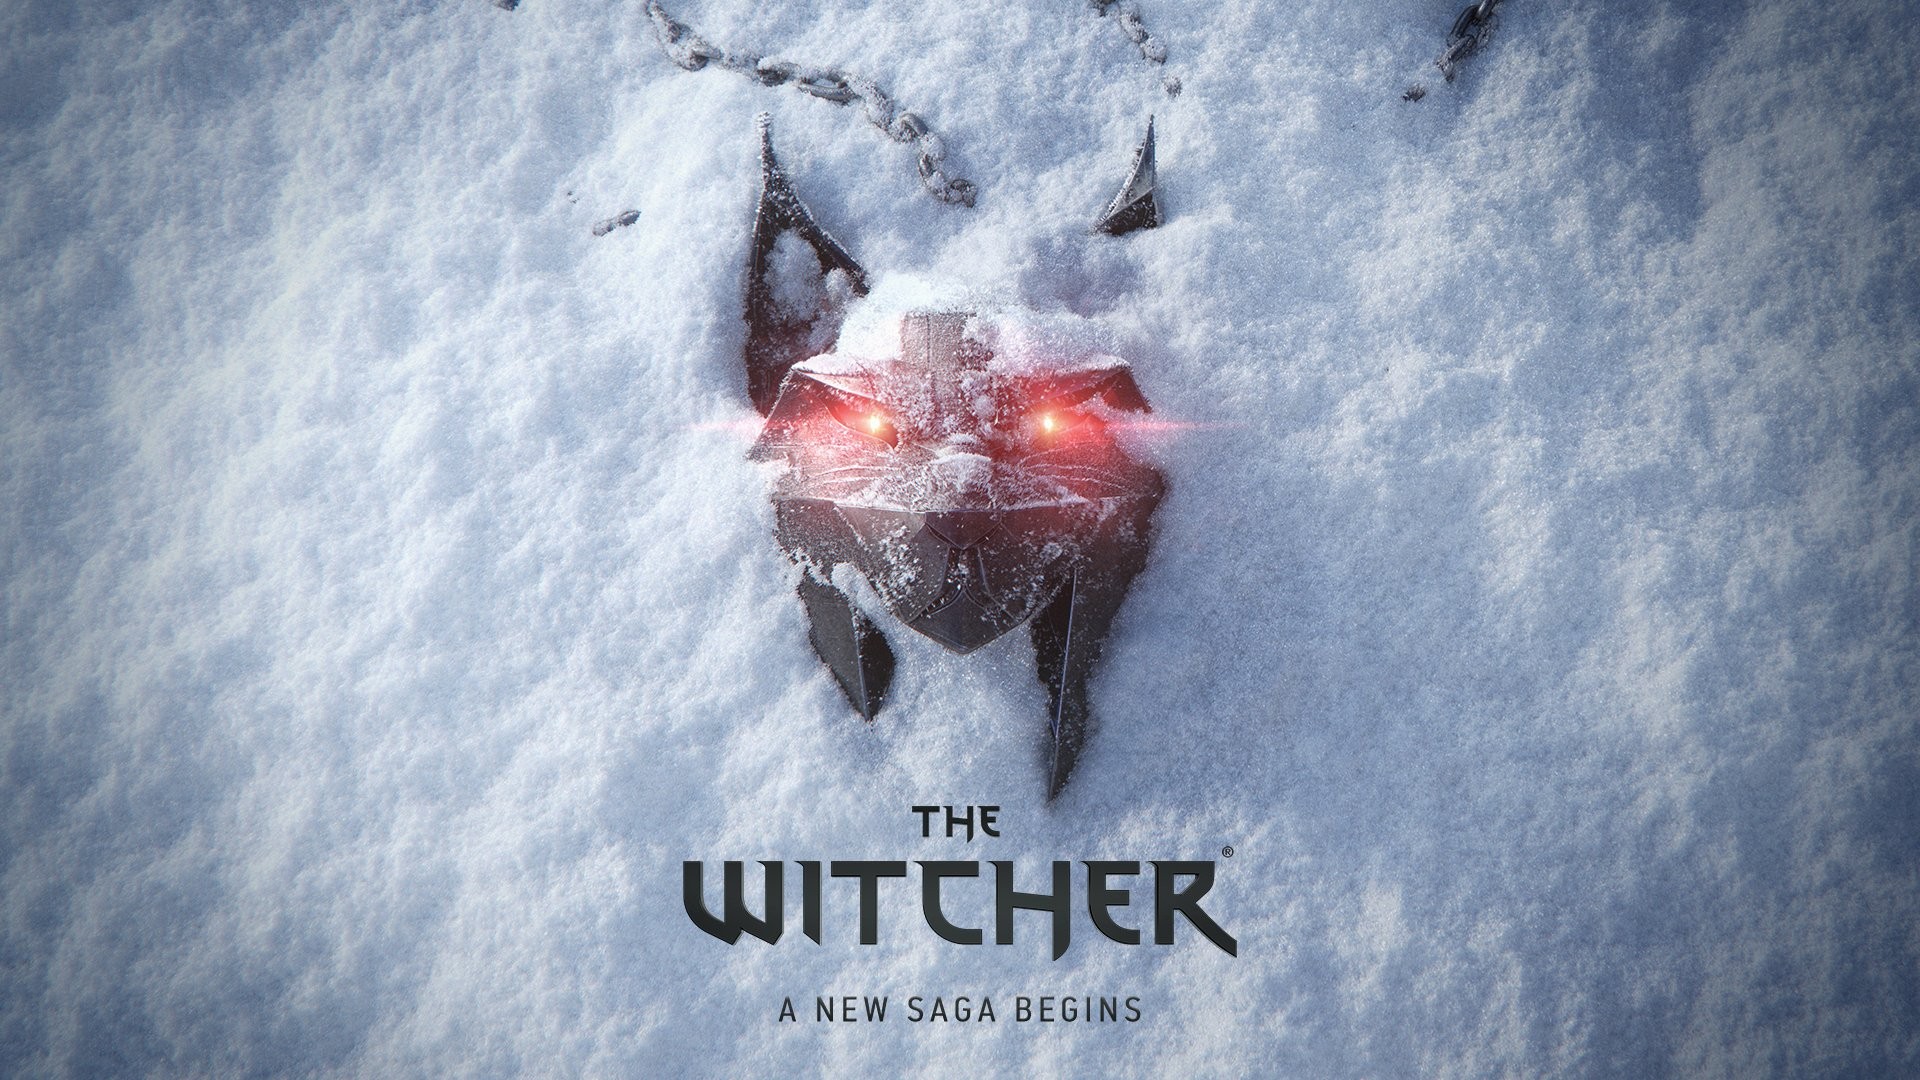 CD Projekt เปิดตัว The Witcher ภาคใหม่